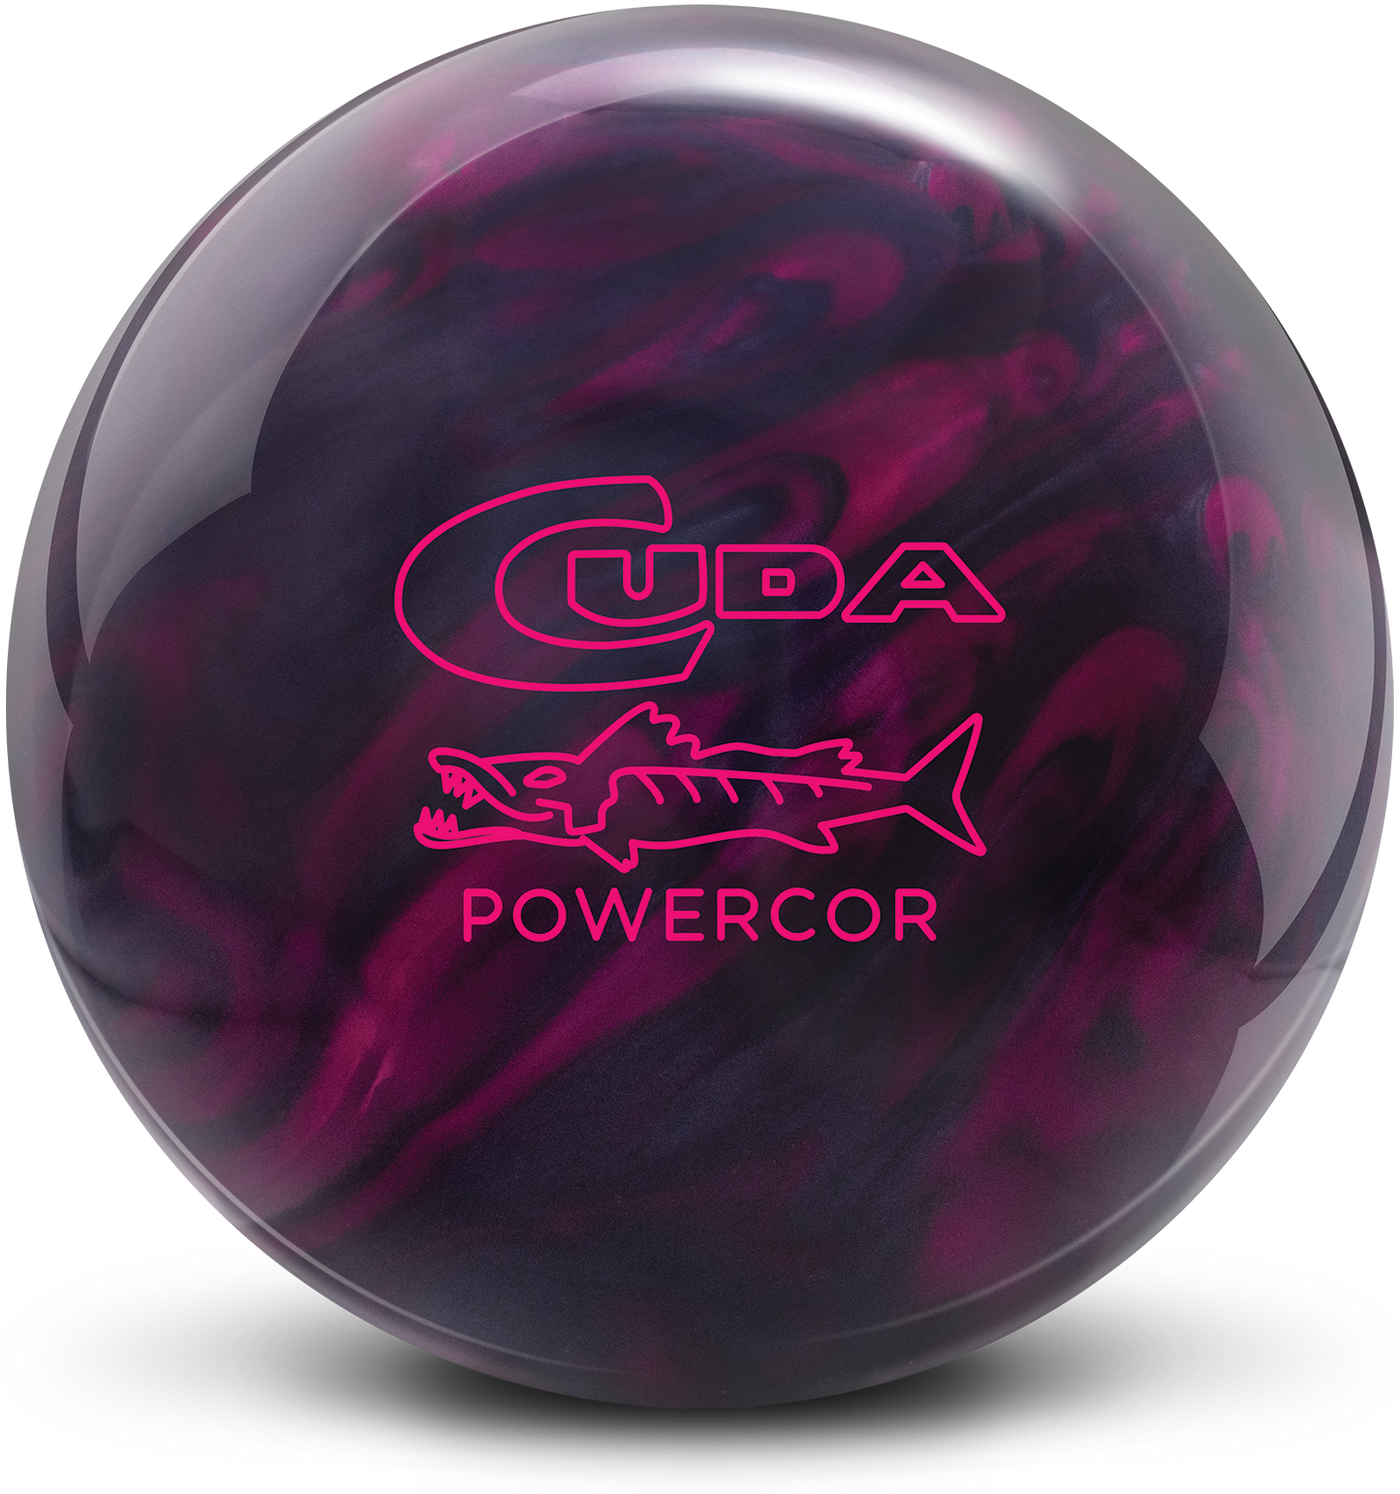 Cuda PowerCOR Bowling Ball